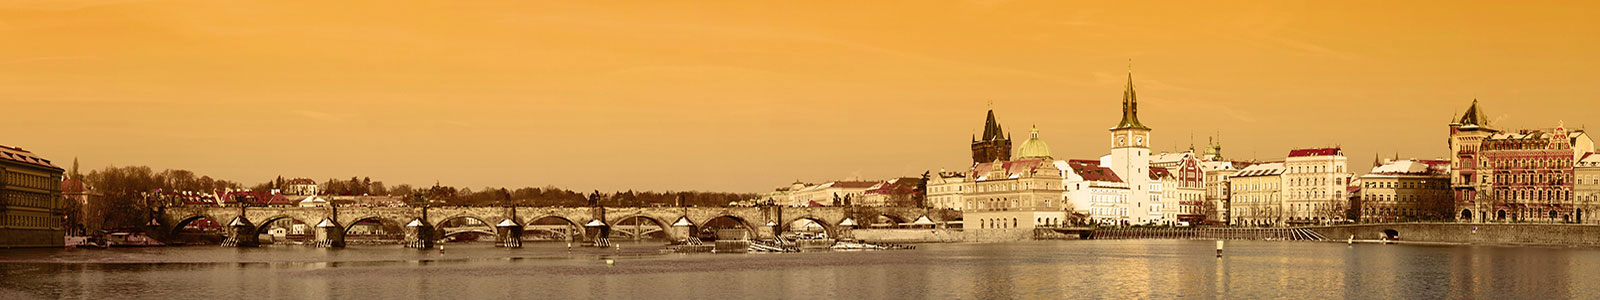 №1373 - Панорамный вид на Прагу